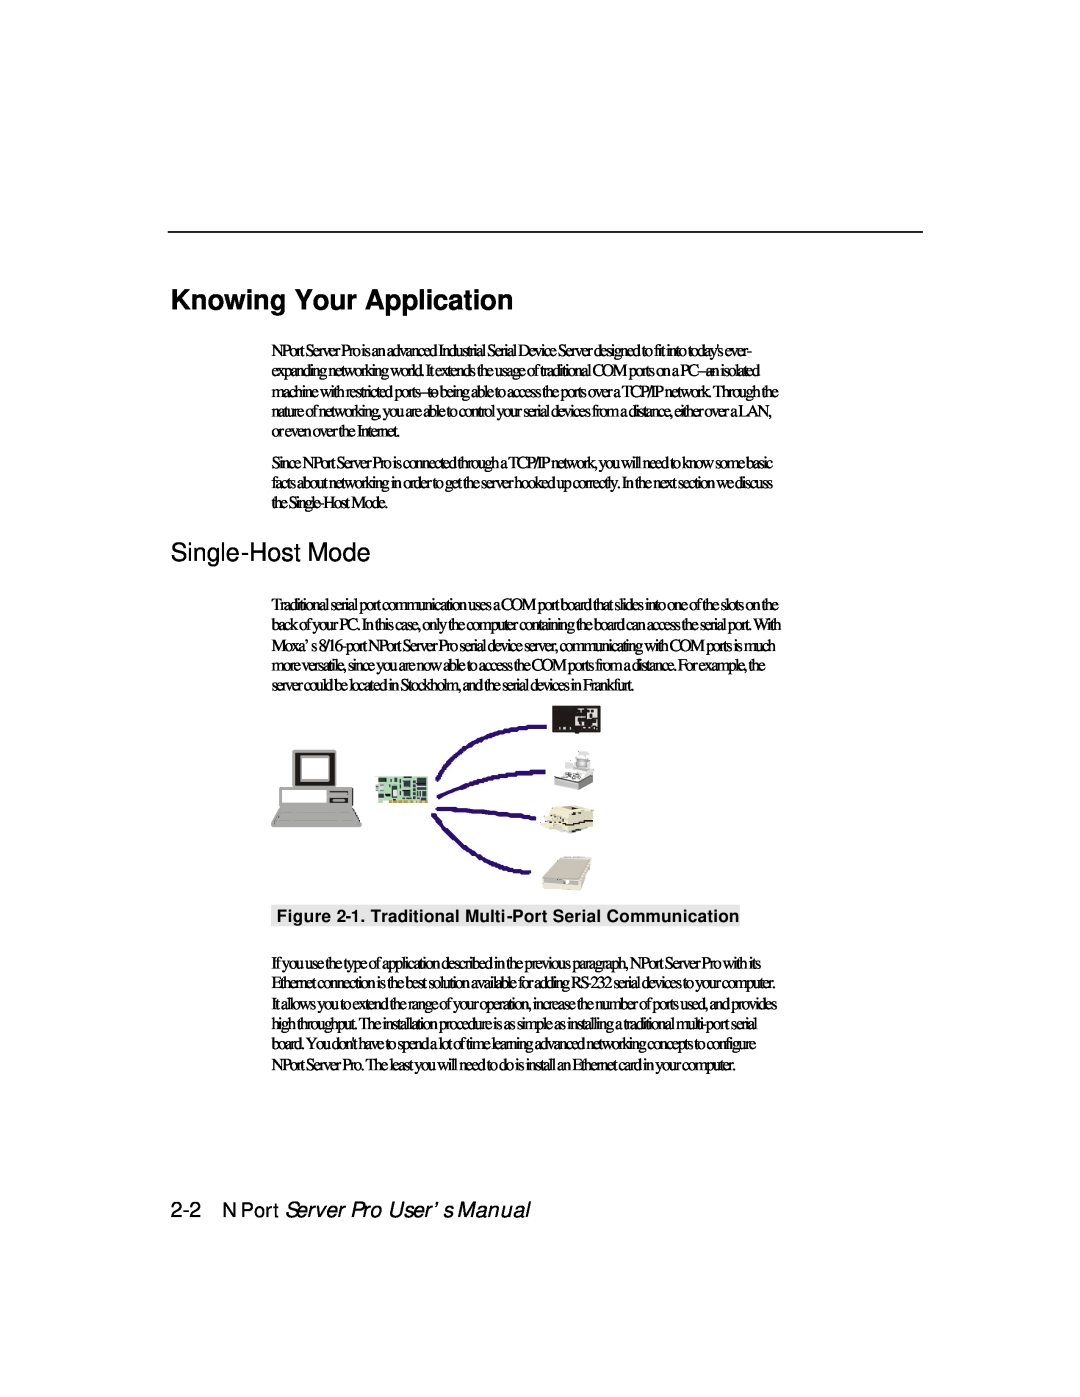 Moxa Technologies DE-303, DE-308 manual Knowing Your Application, Single-Host Mode, NPort Server Pro User’s Manual 